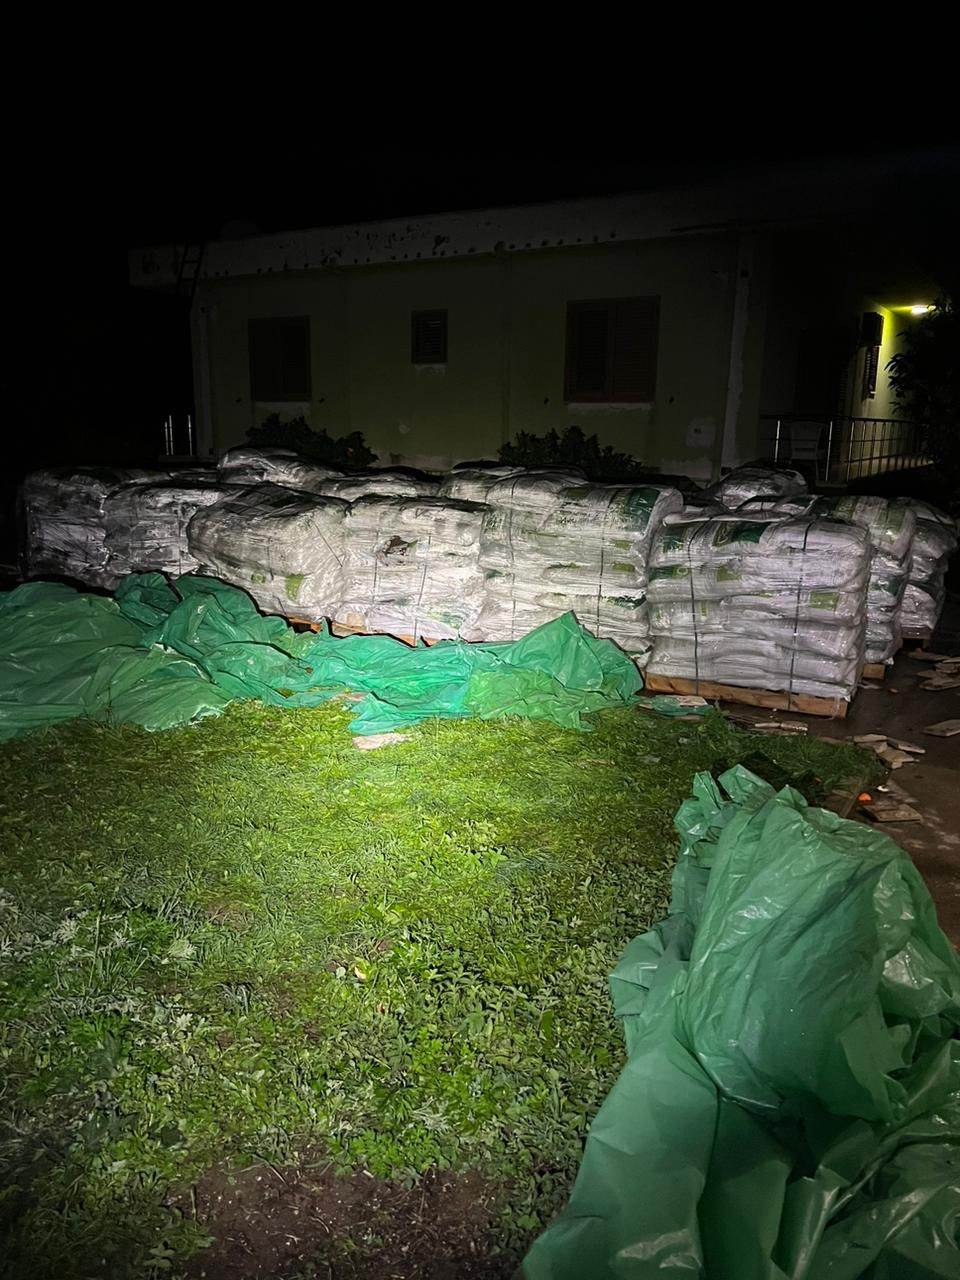  Srbi pali zbog 2 tone kokaina 